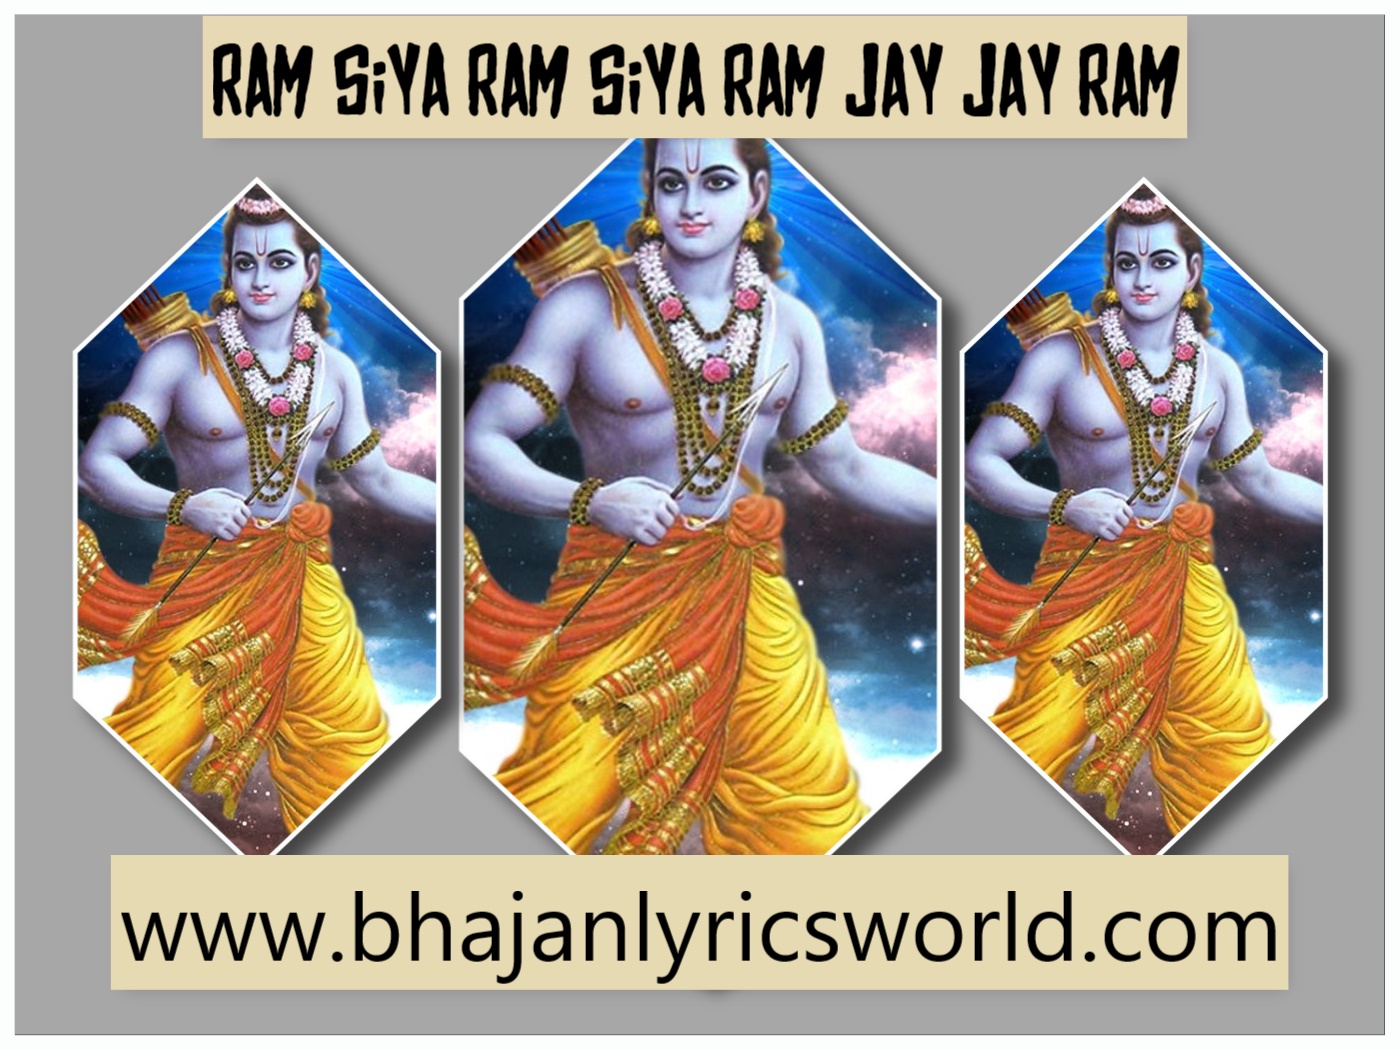 Ram Siya Ram Siya Ram Jay Jay Ram | Bhajan Lyrics World